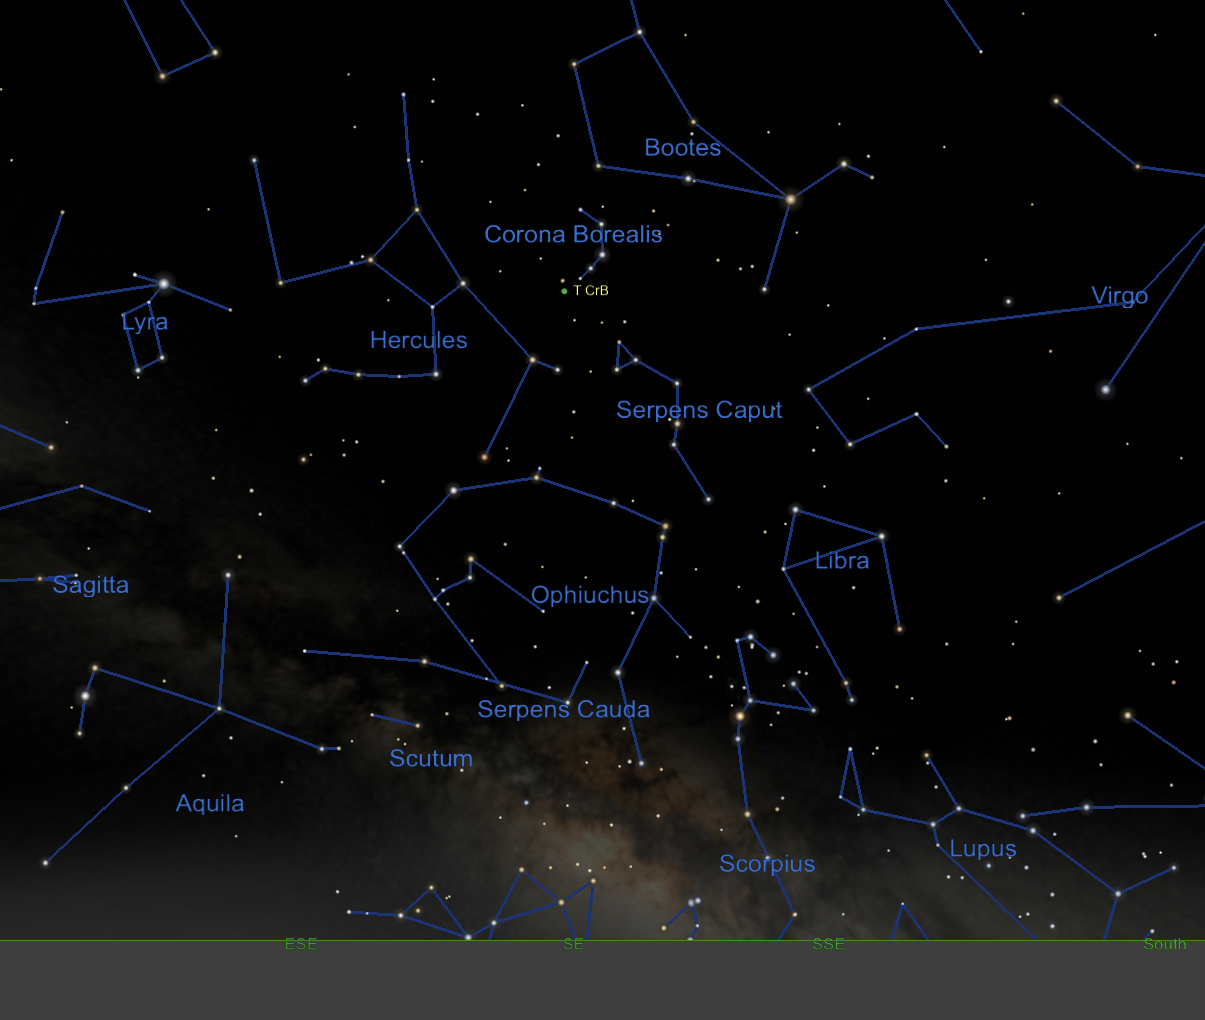 The constellations Corona Borealis, Hercules, and more